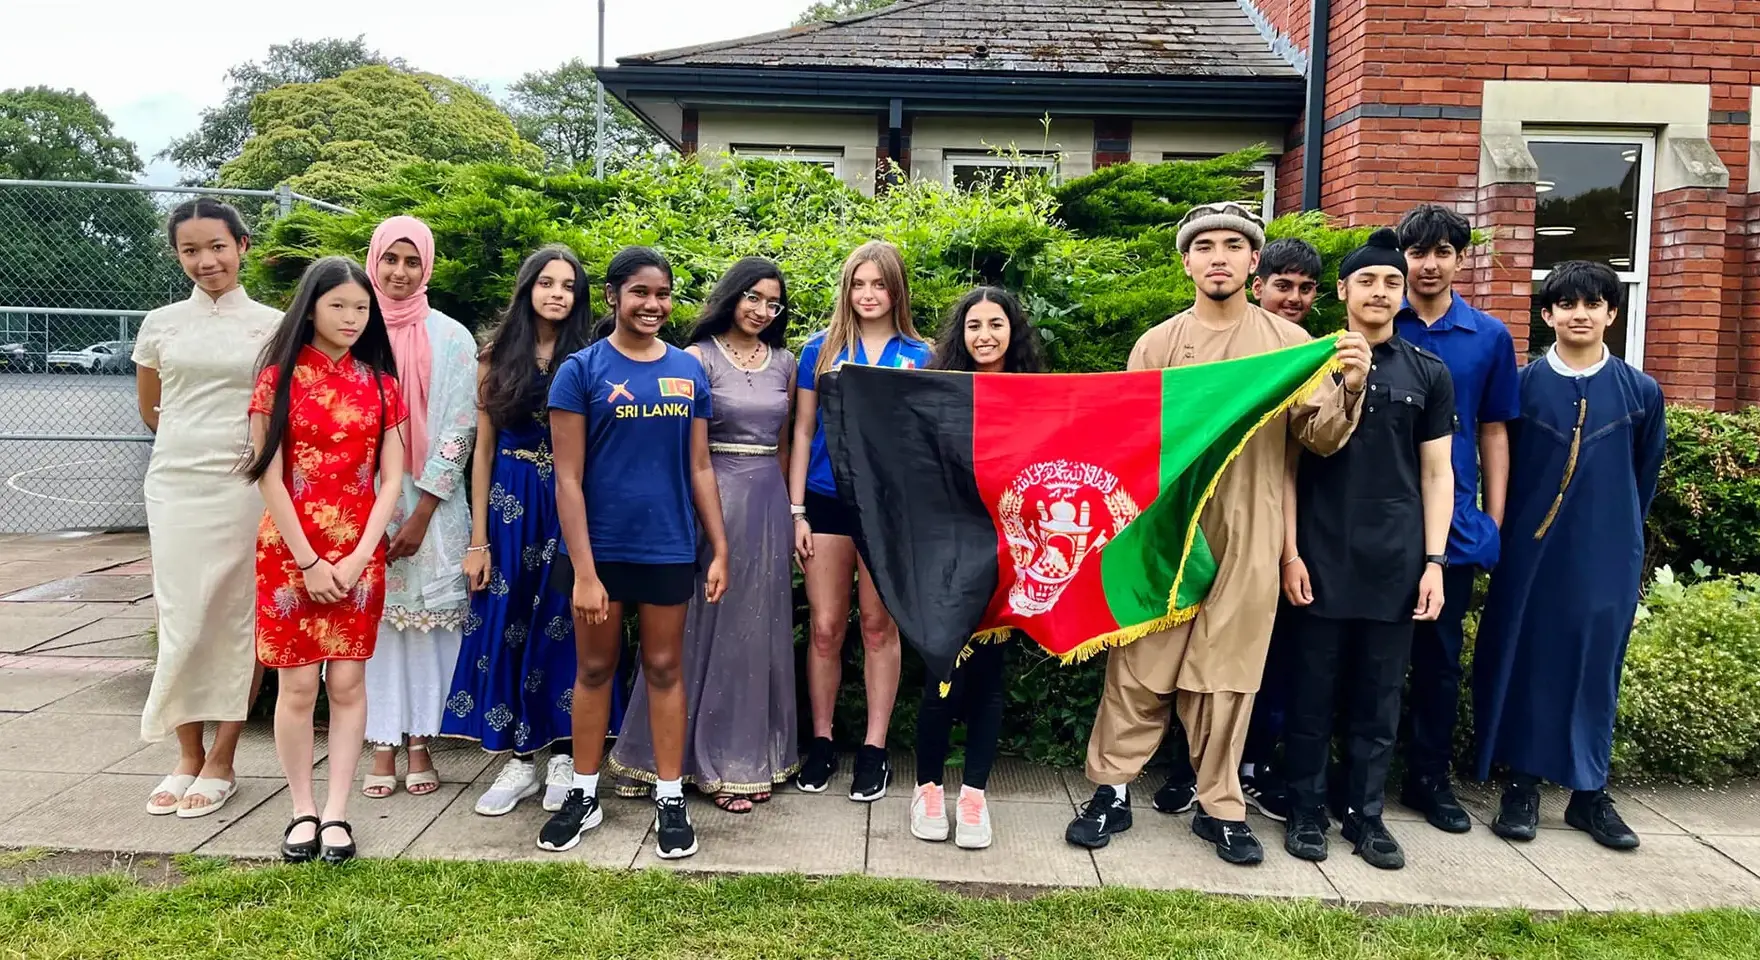 Wolverhampton Grammar School celebrates students' cultures